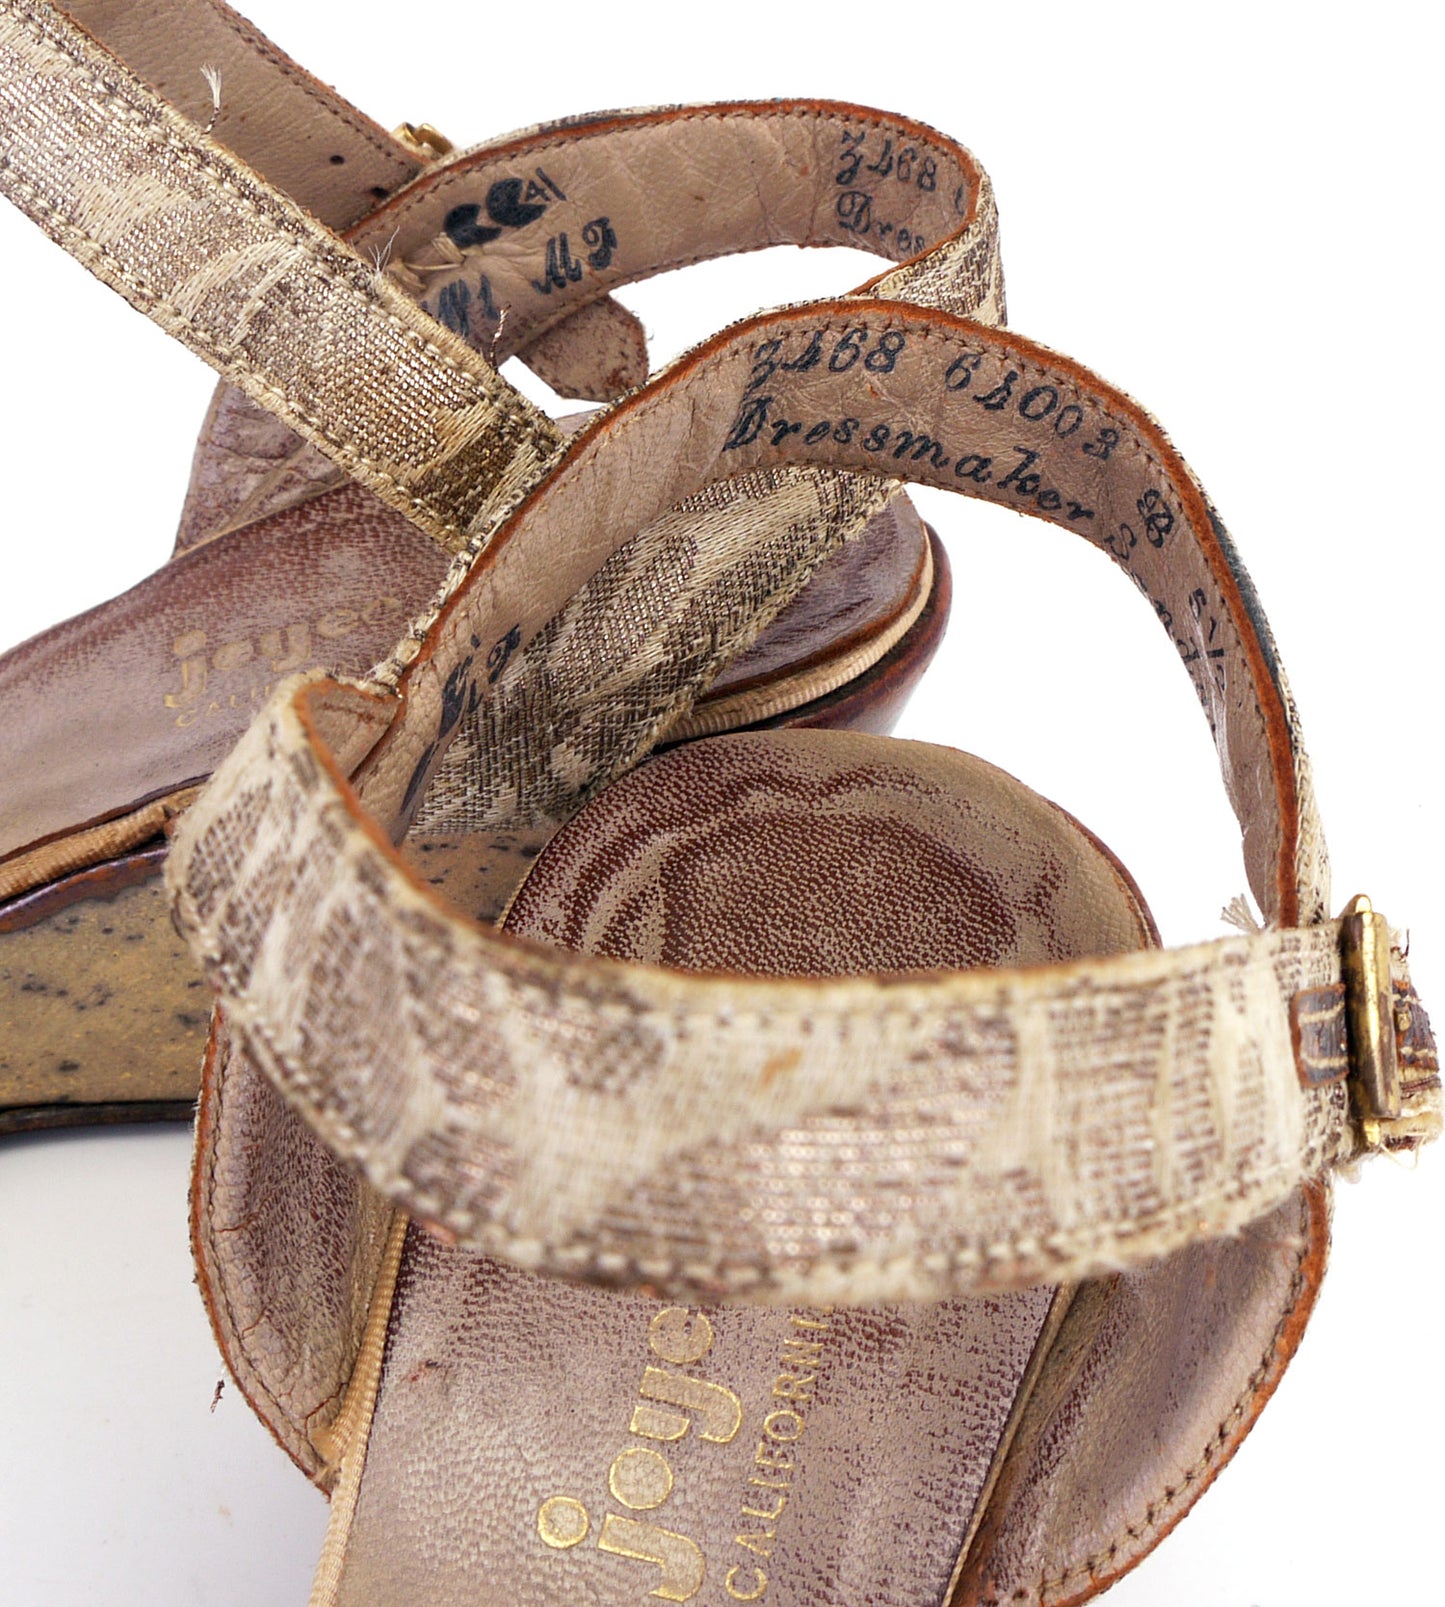 1940s CC41 Brocade Wedge Sandals by Joyce UK 3